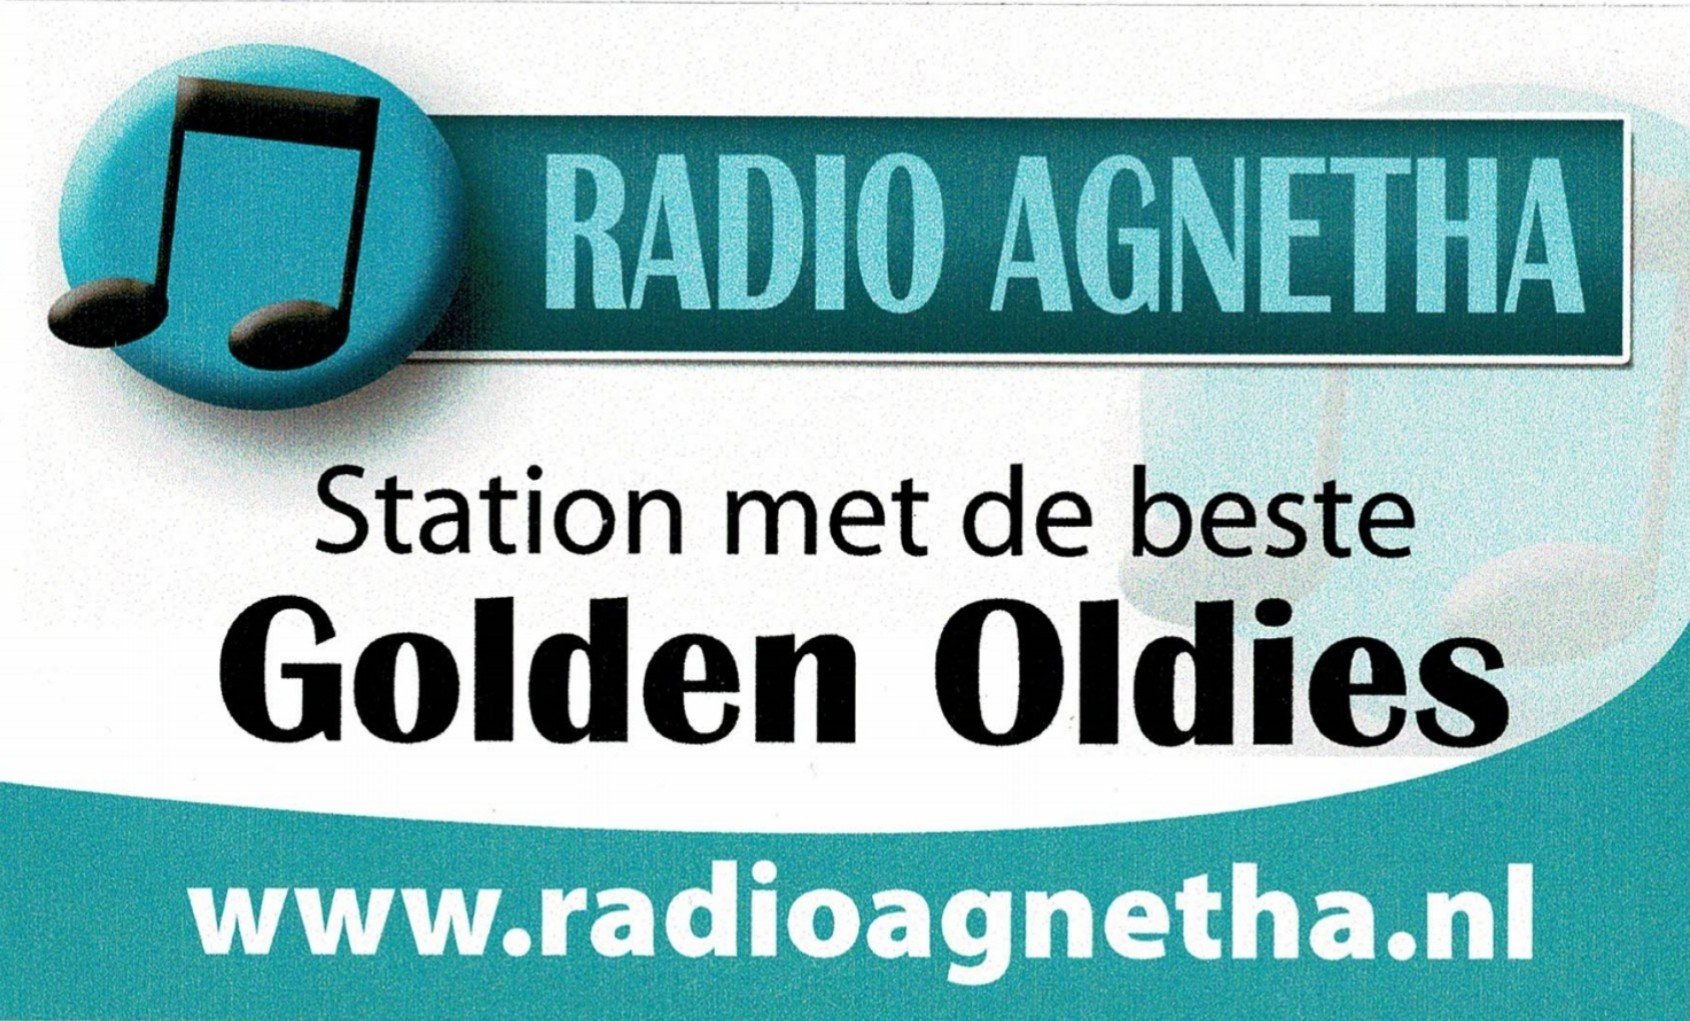 (c) Radioagnetha.nl